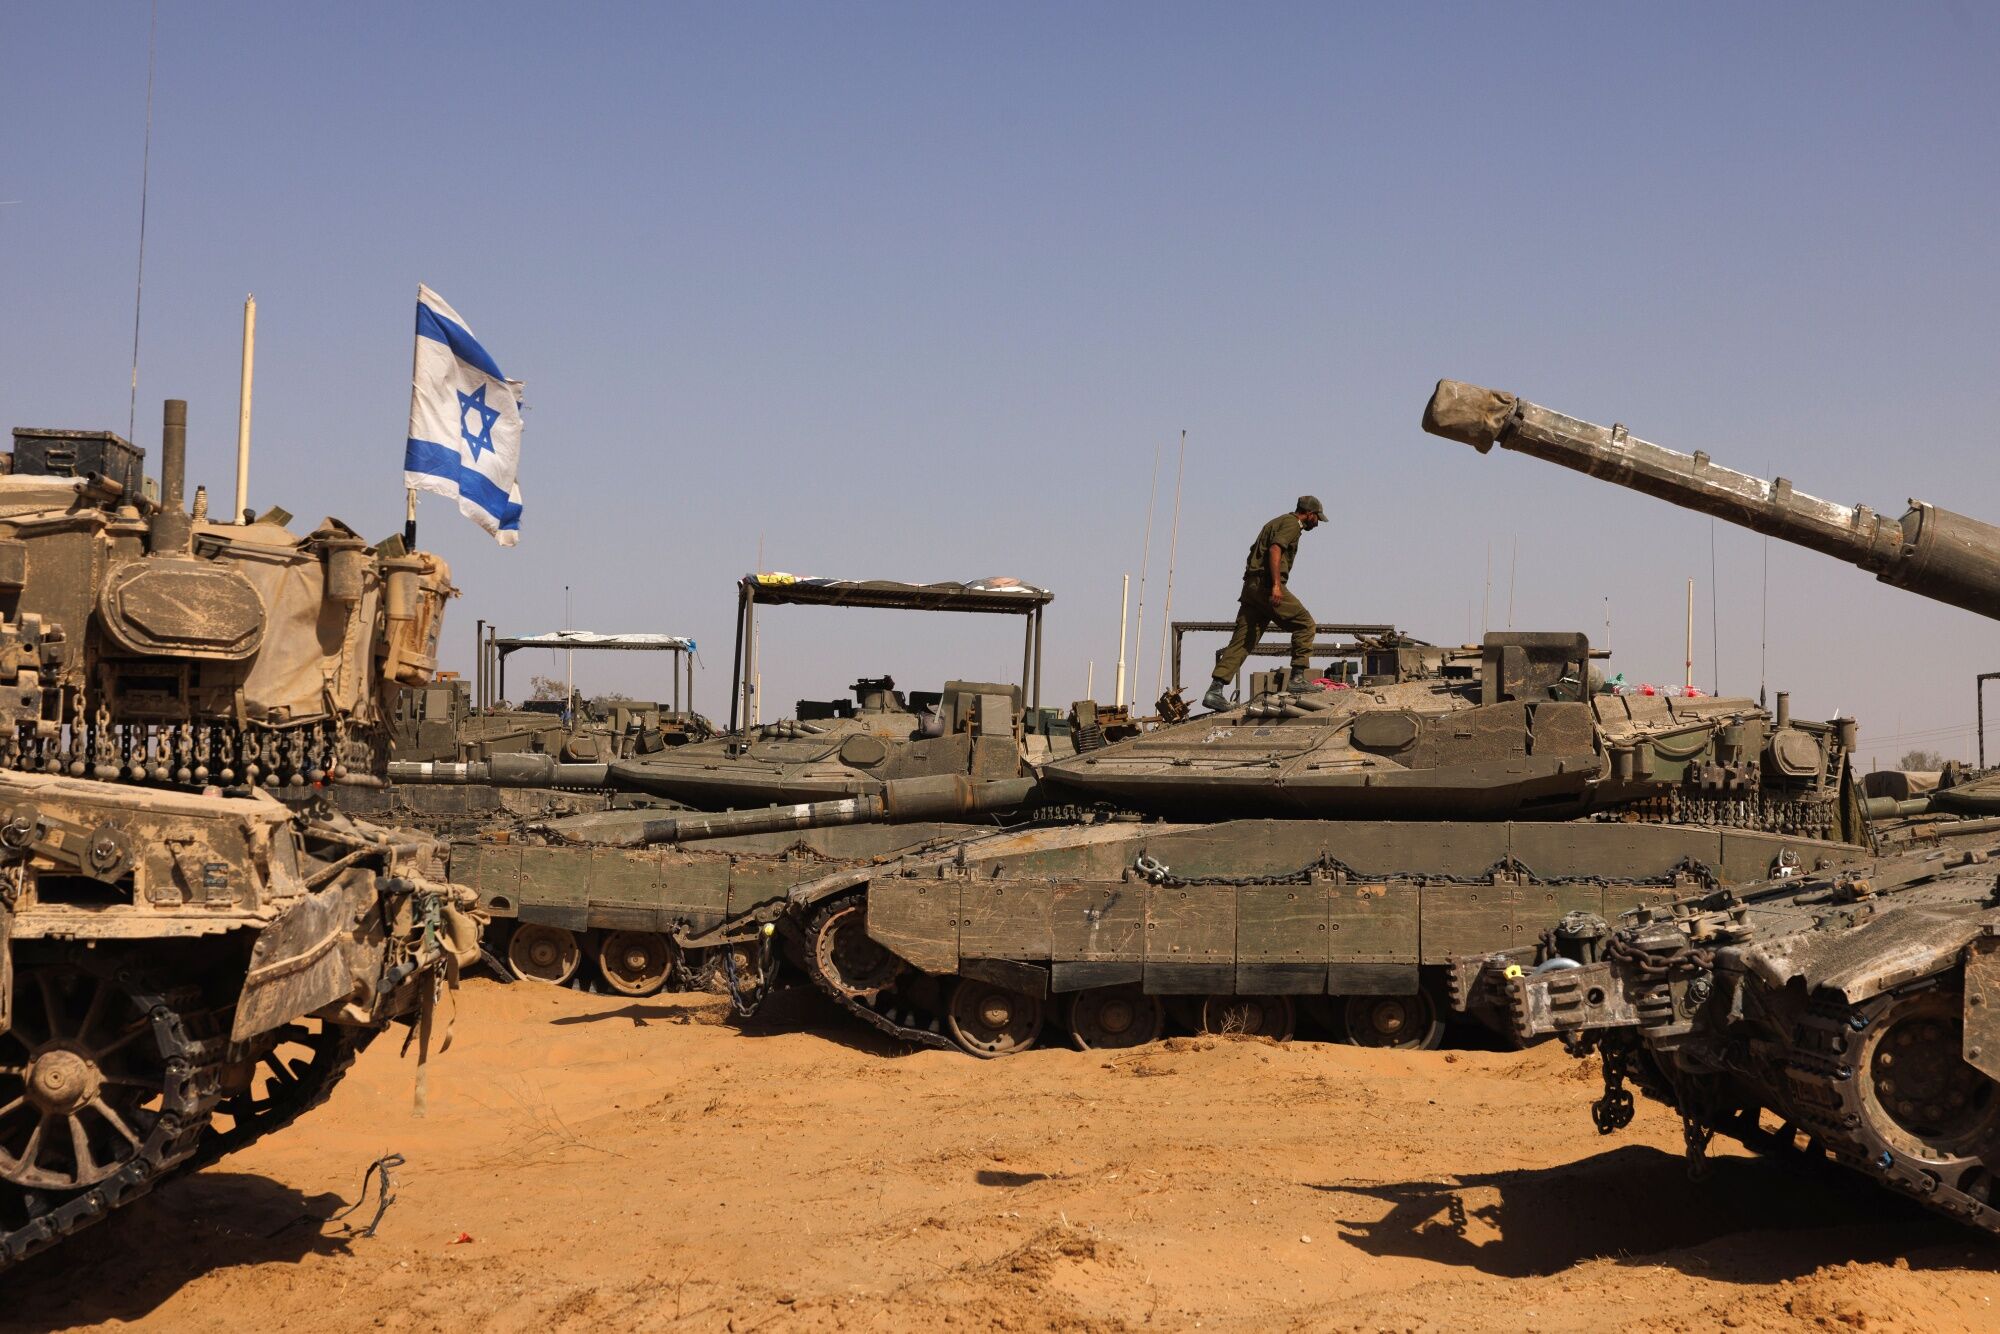 truce talks drag as hamas hits israel crossing in deadly attack